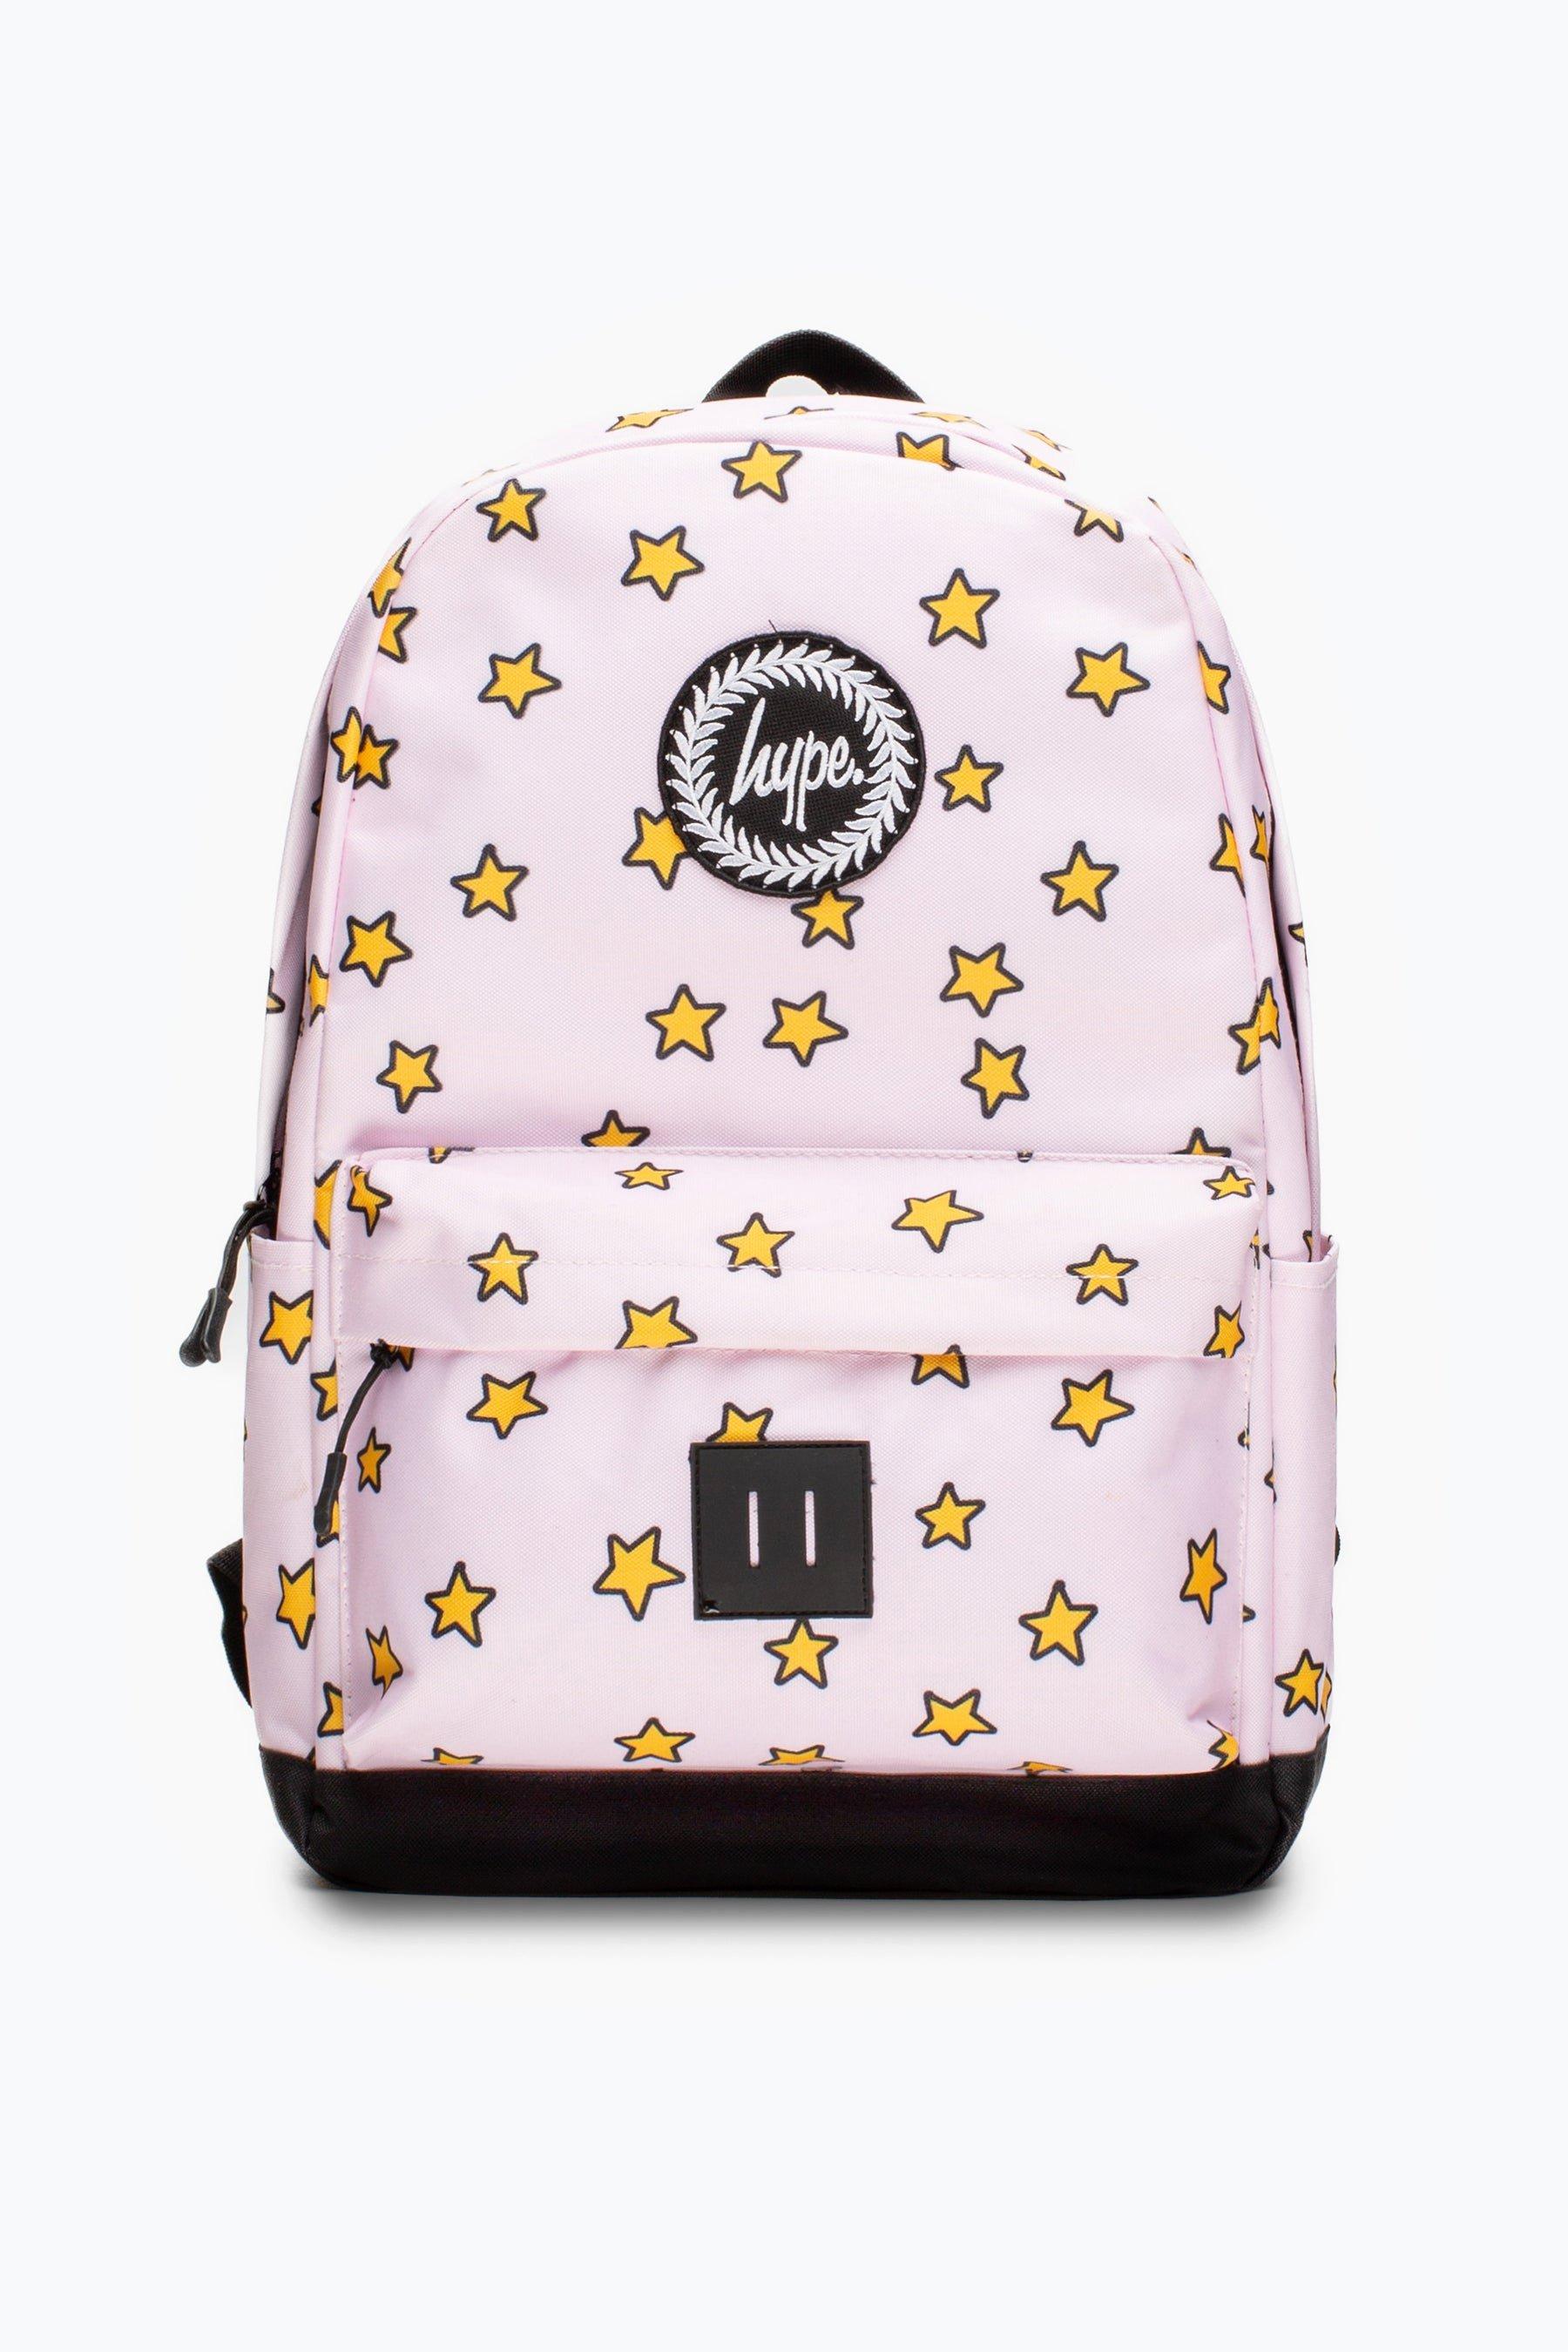 Hype Backpack Selection - School Bags - New Travel Rucksack - Gym - Boys /  Girls | eBay